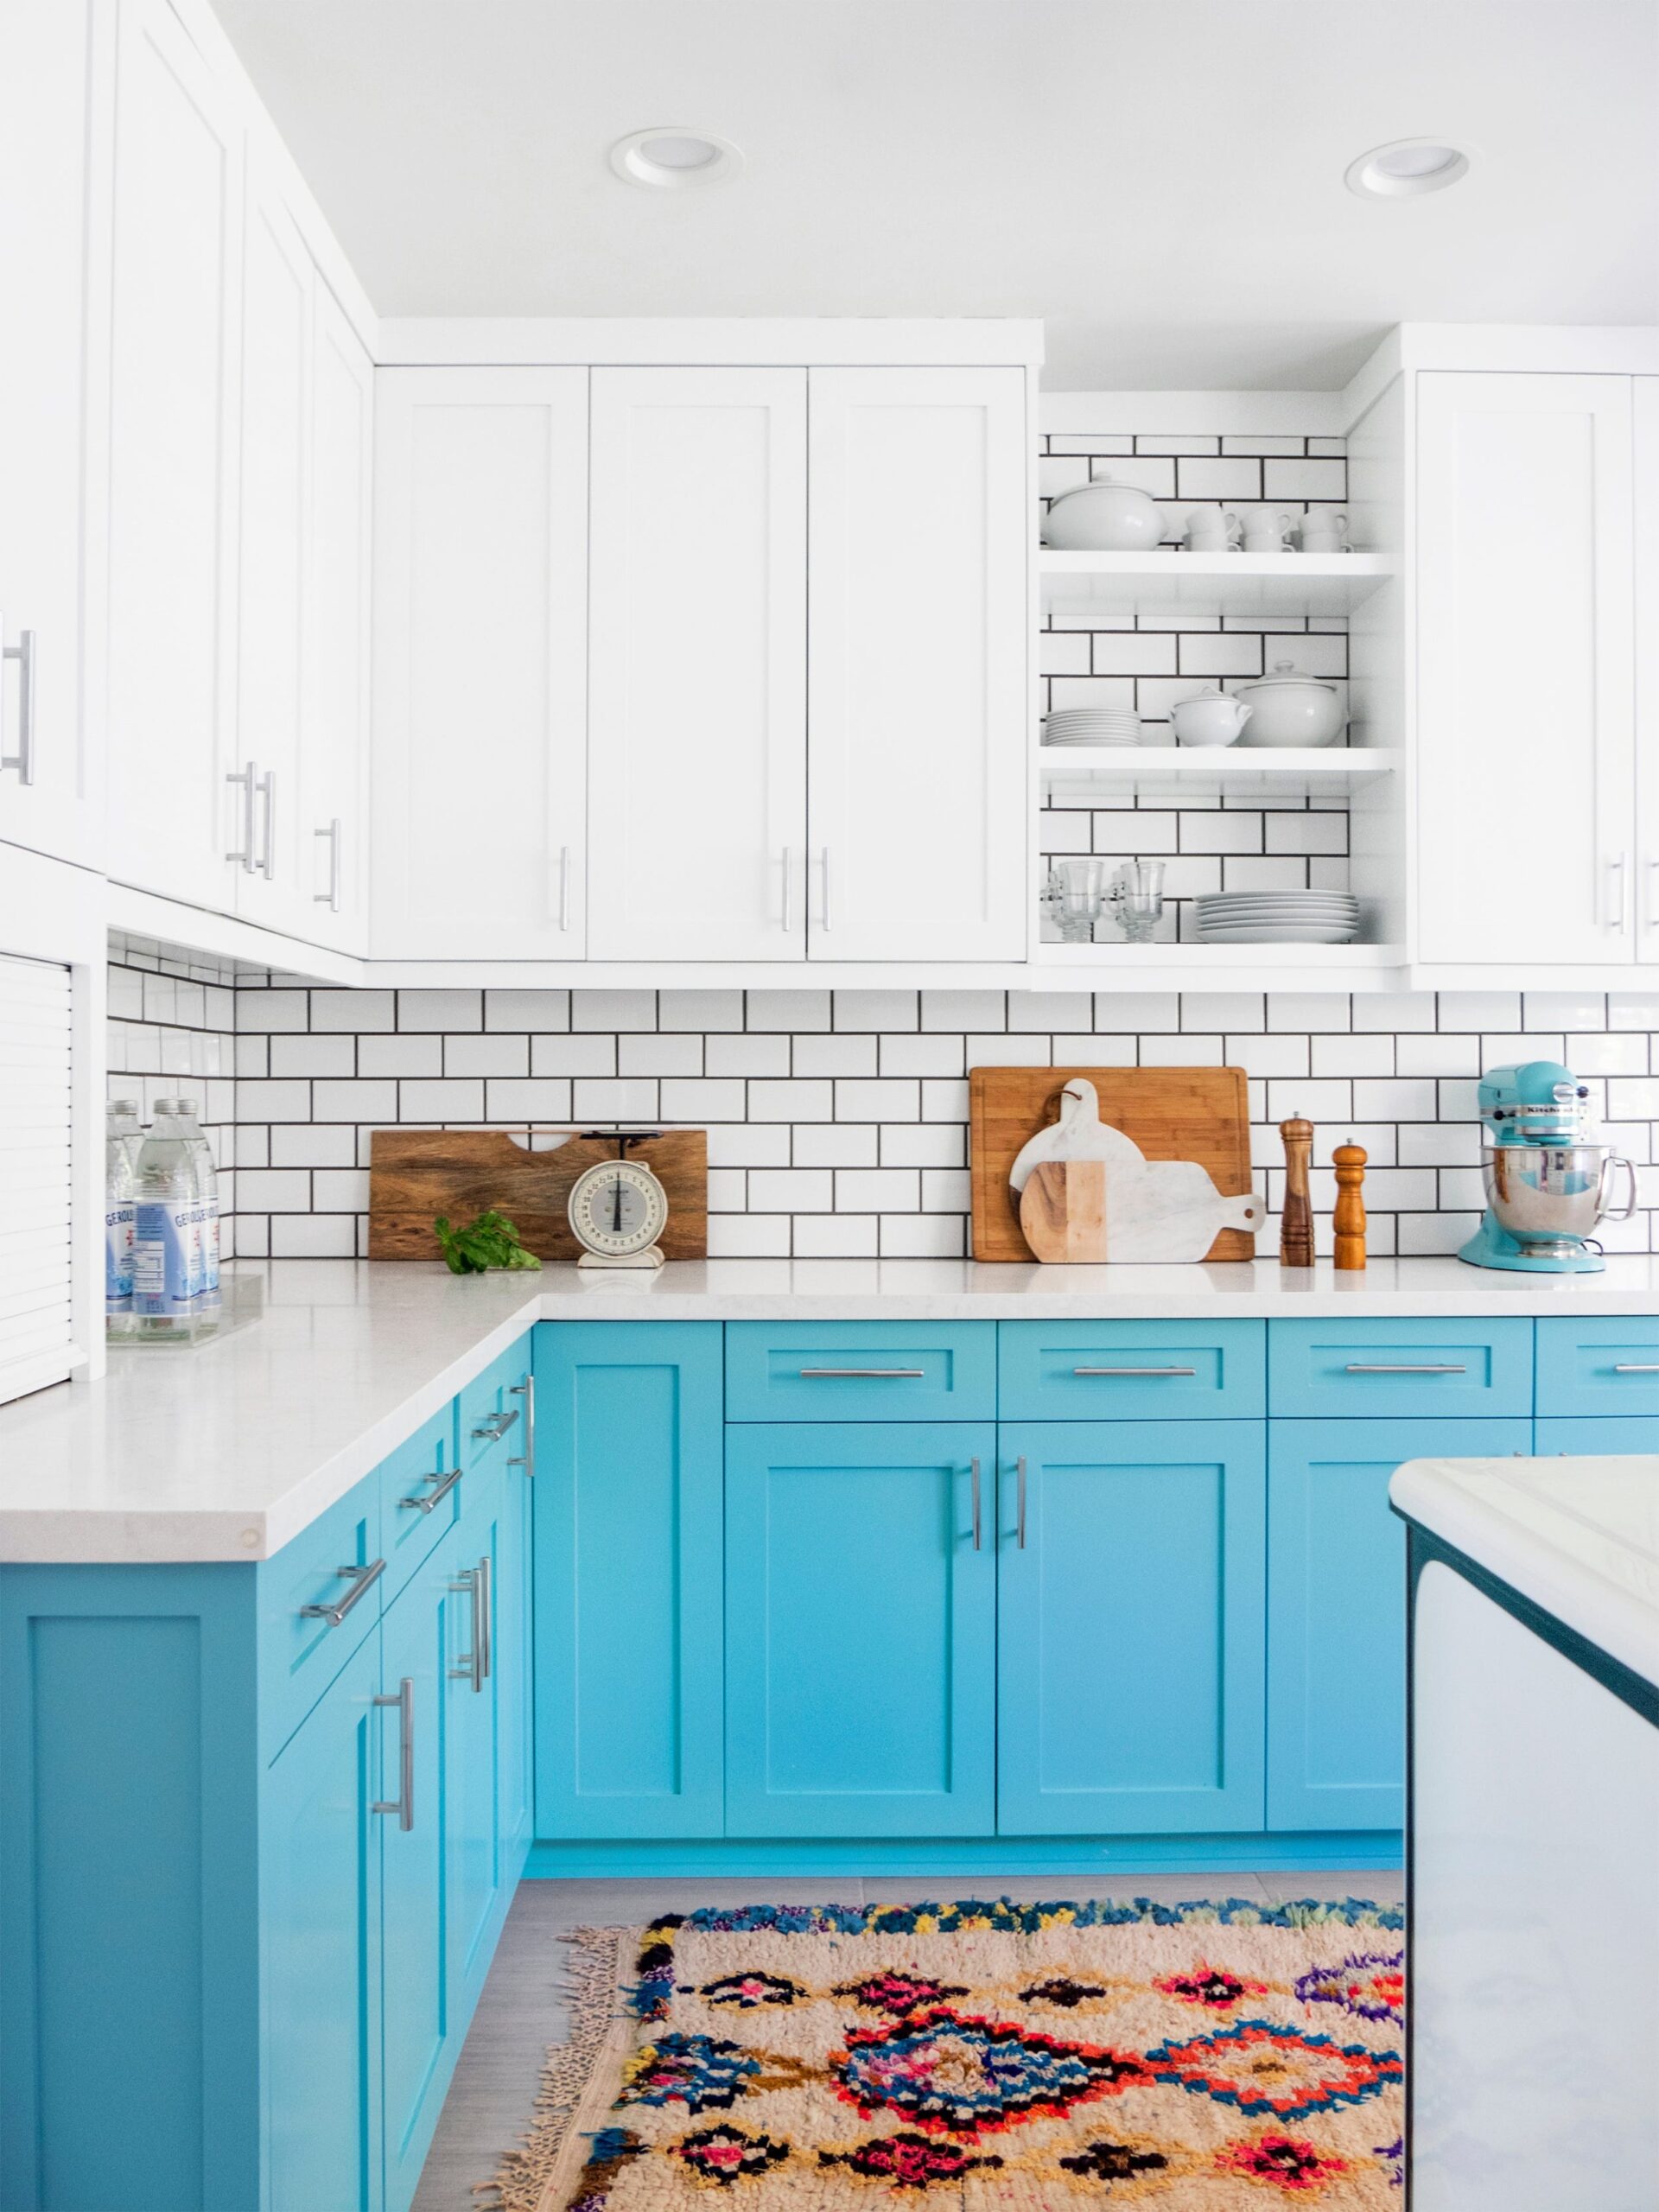 7 Stylish Modern Kitchen Ideas - Contemporary Kitchen Remodels - funky kitchen ideas